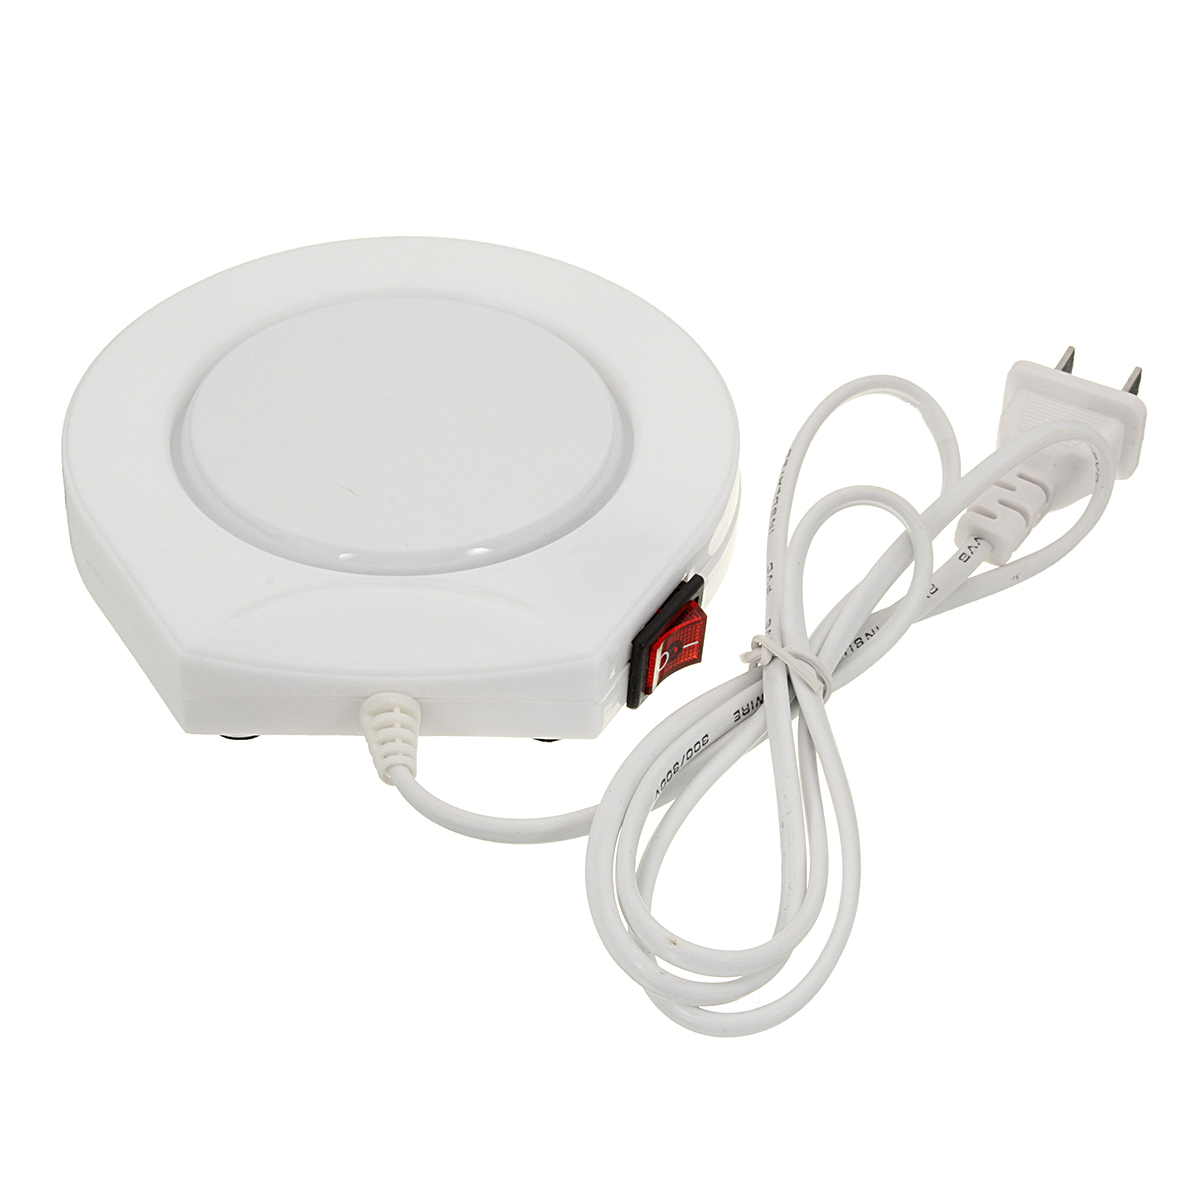 220v-White-Electric-Powered-Cup-Warmer-Heater-Pad-Coffee-Tea-Milk-Mug-US-Plug-1114304